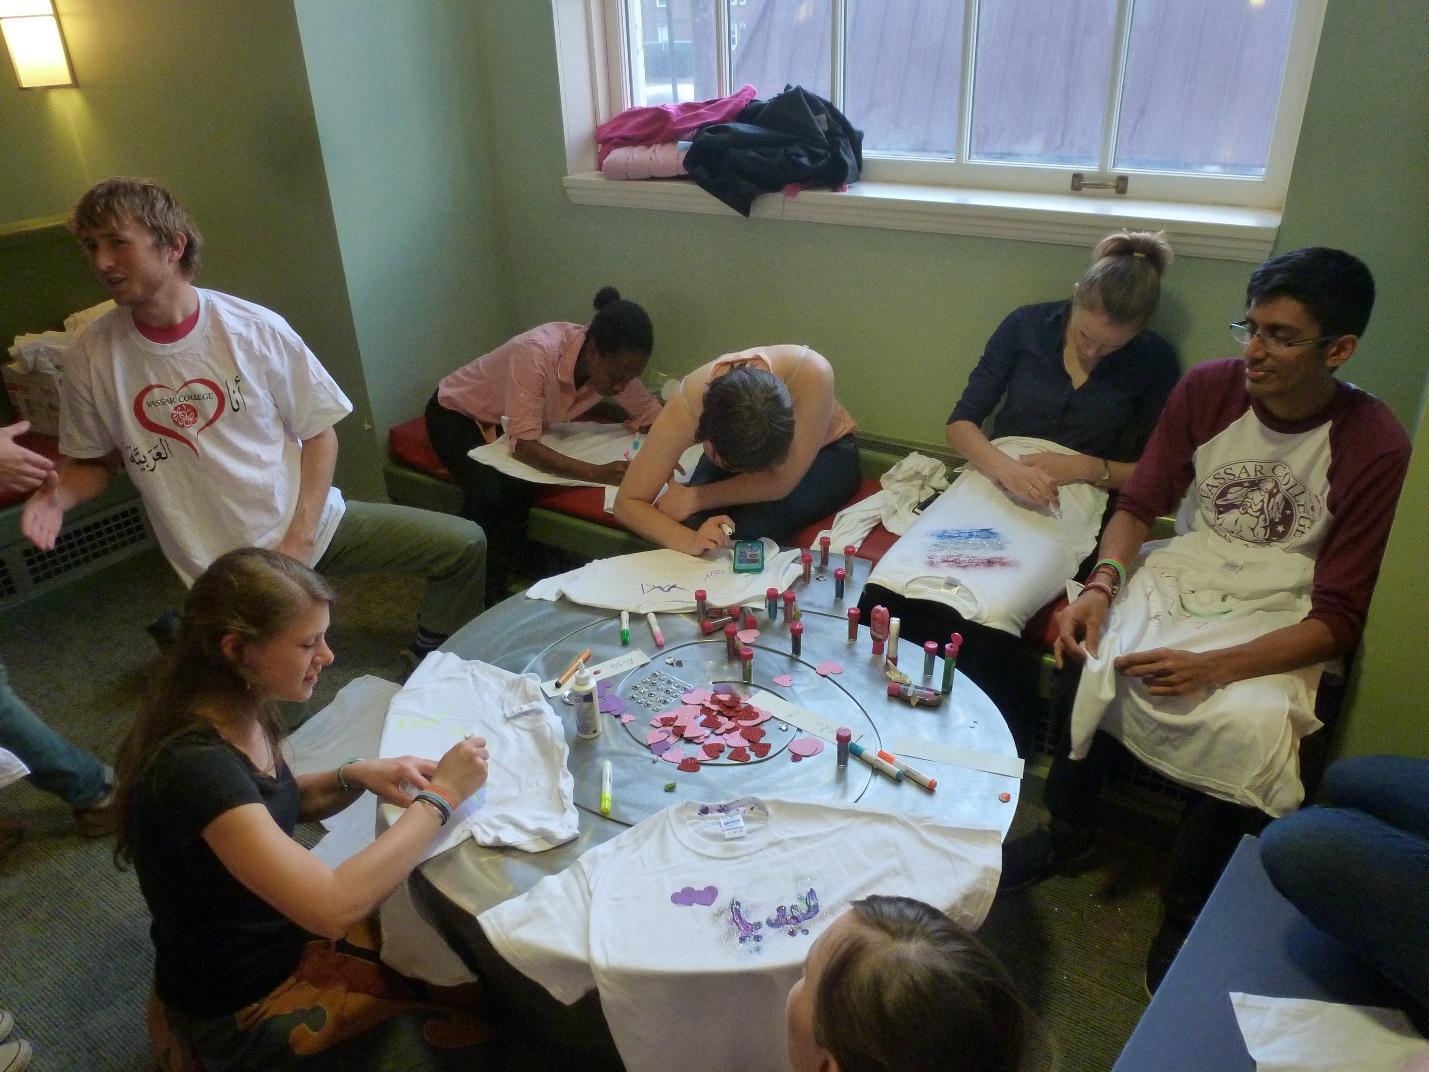 A group of students sit at a circular table, decorating T-shirts